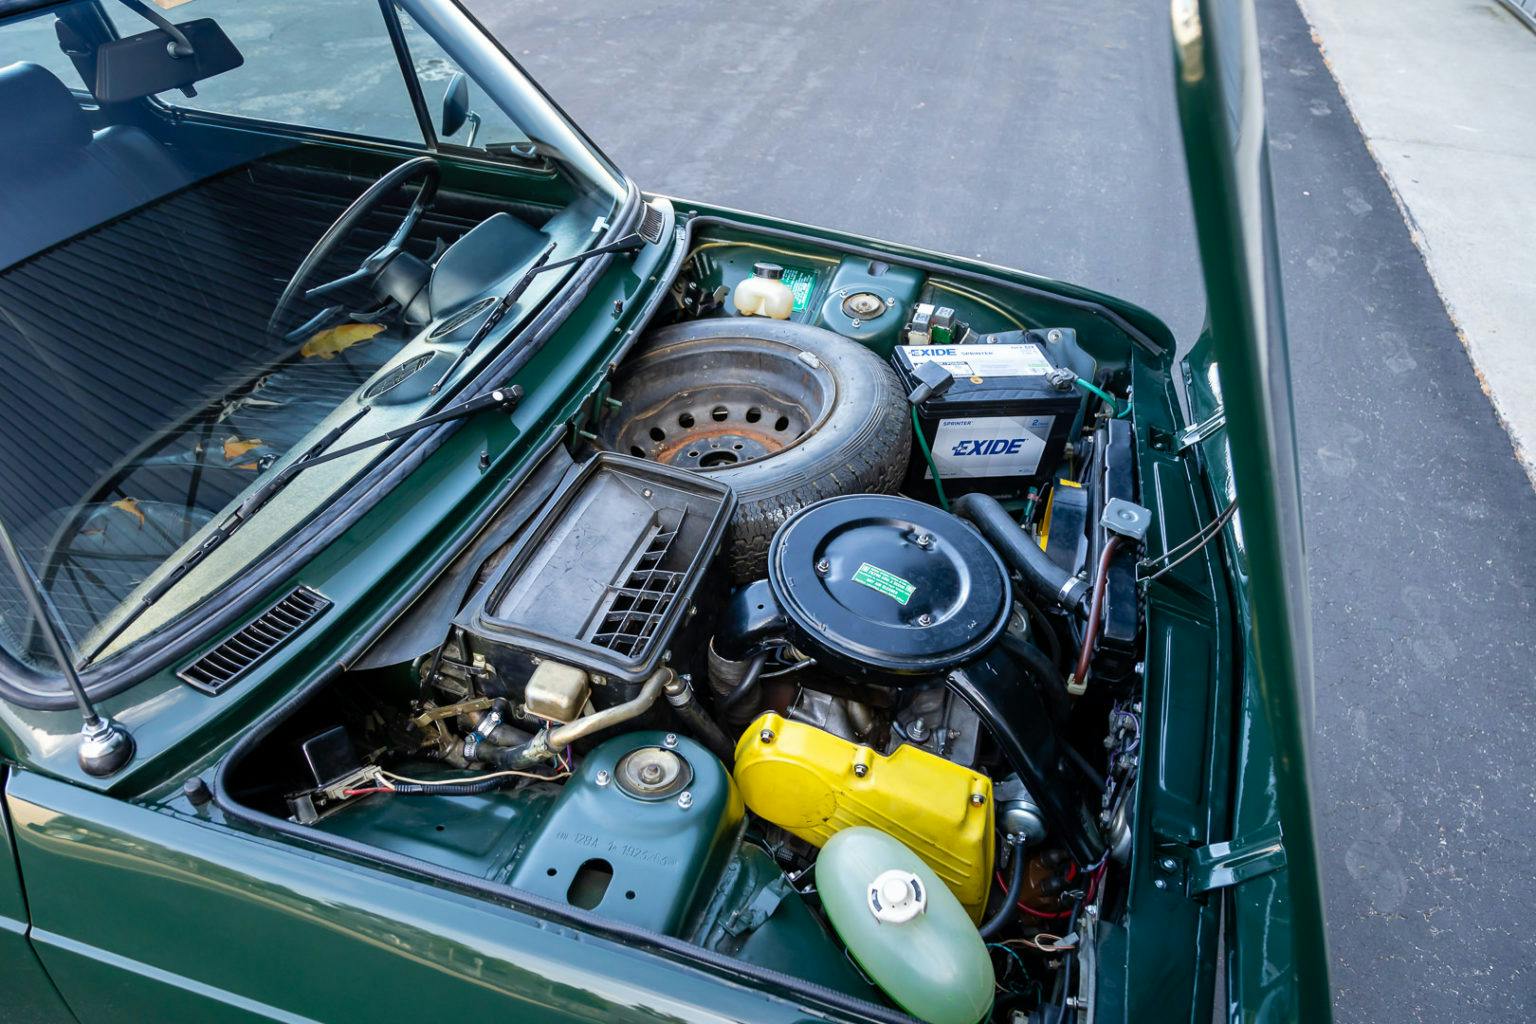 Tom Hanks' Fiat 128 engine